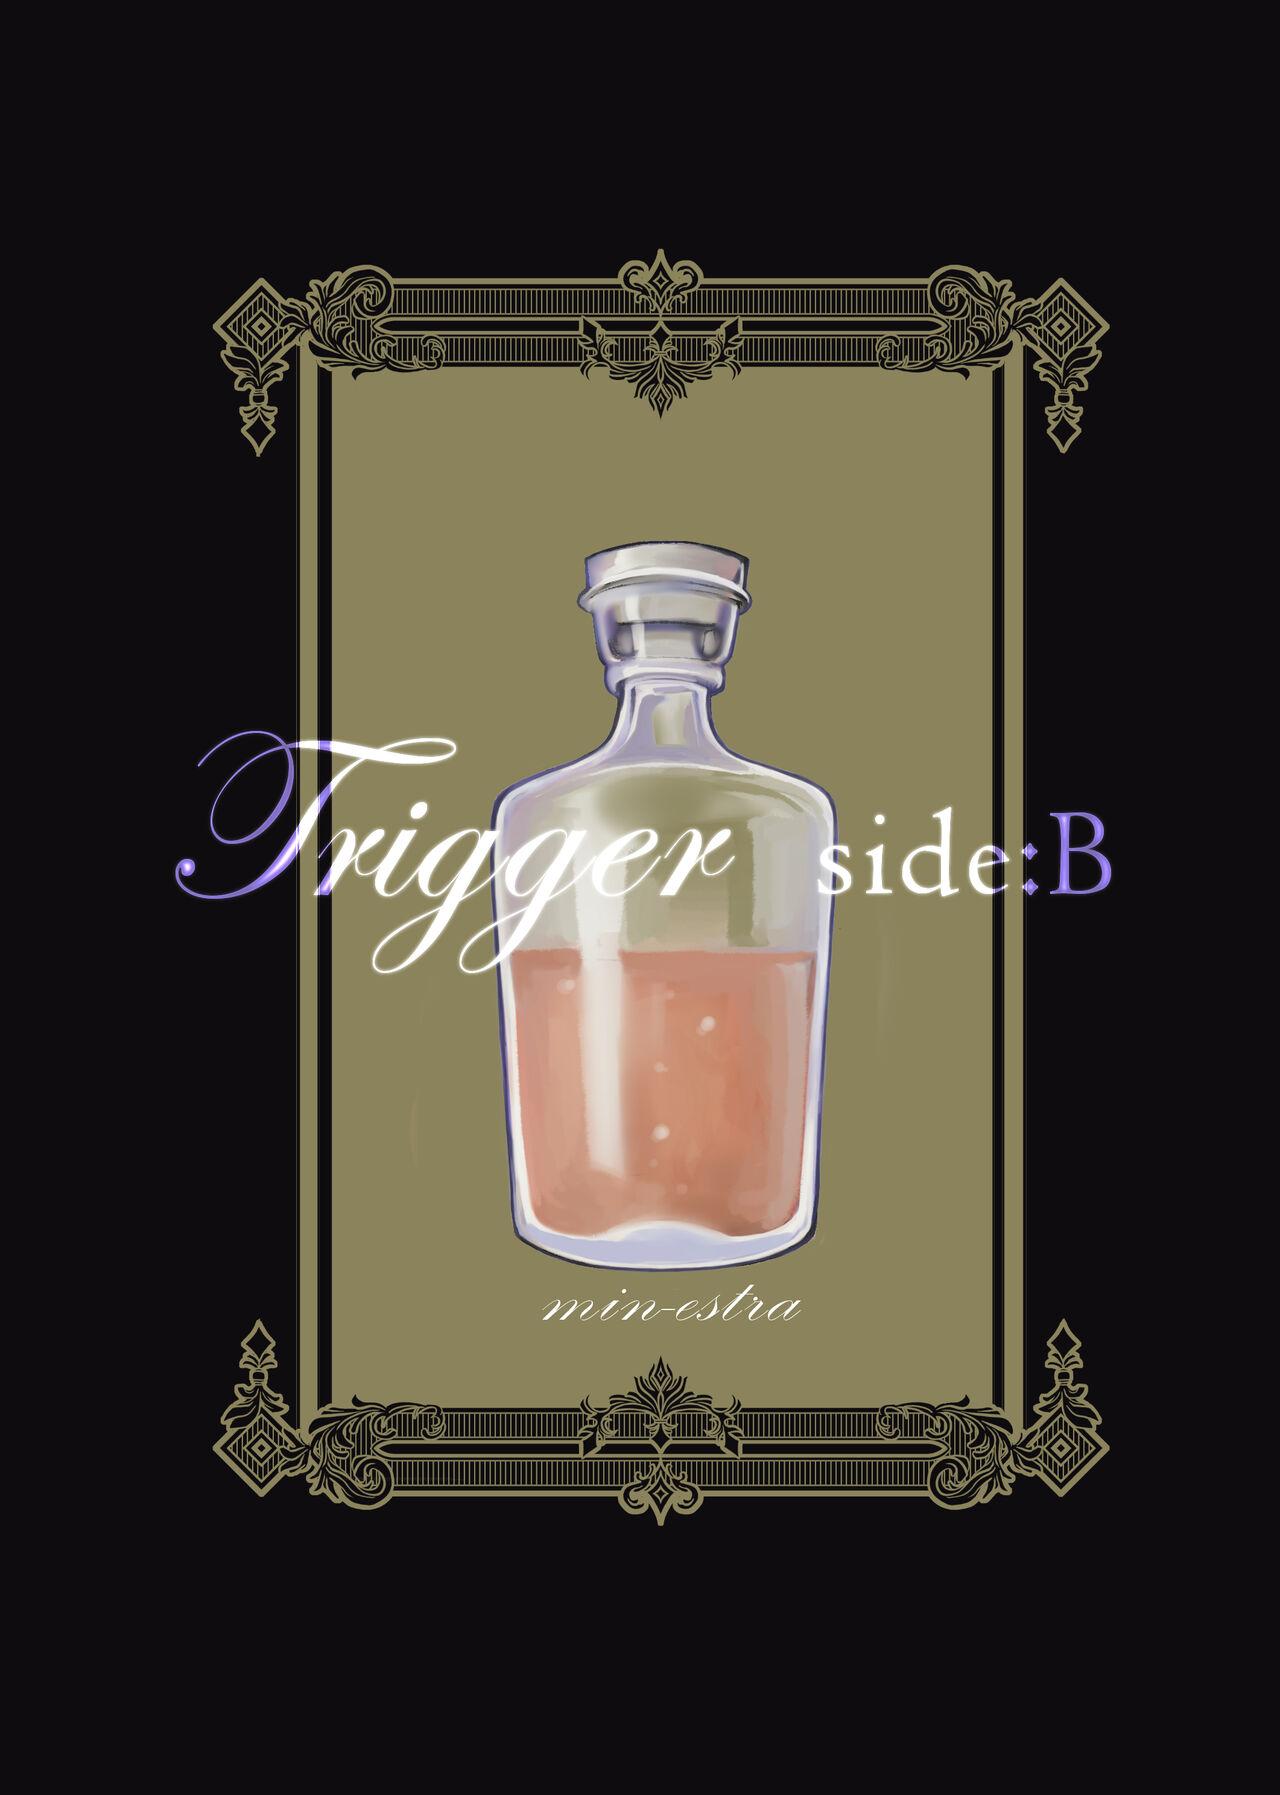 Trigger side:B【R18】 1